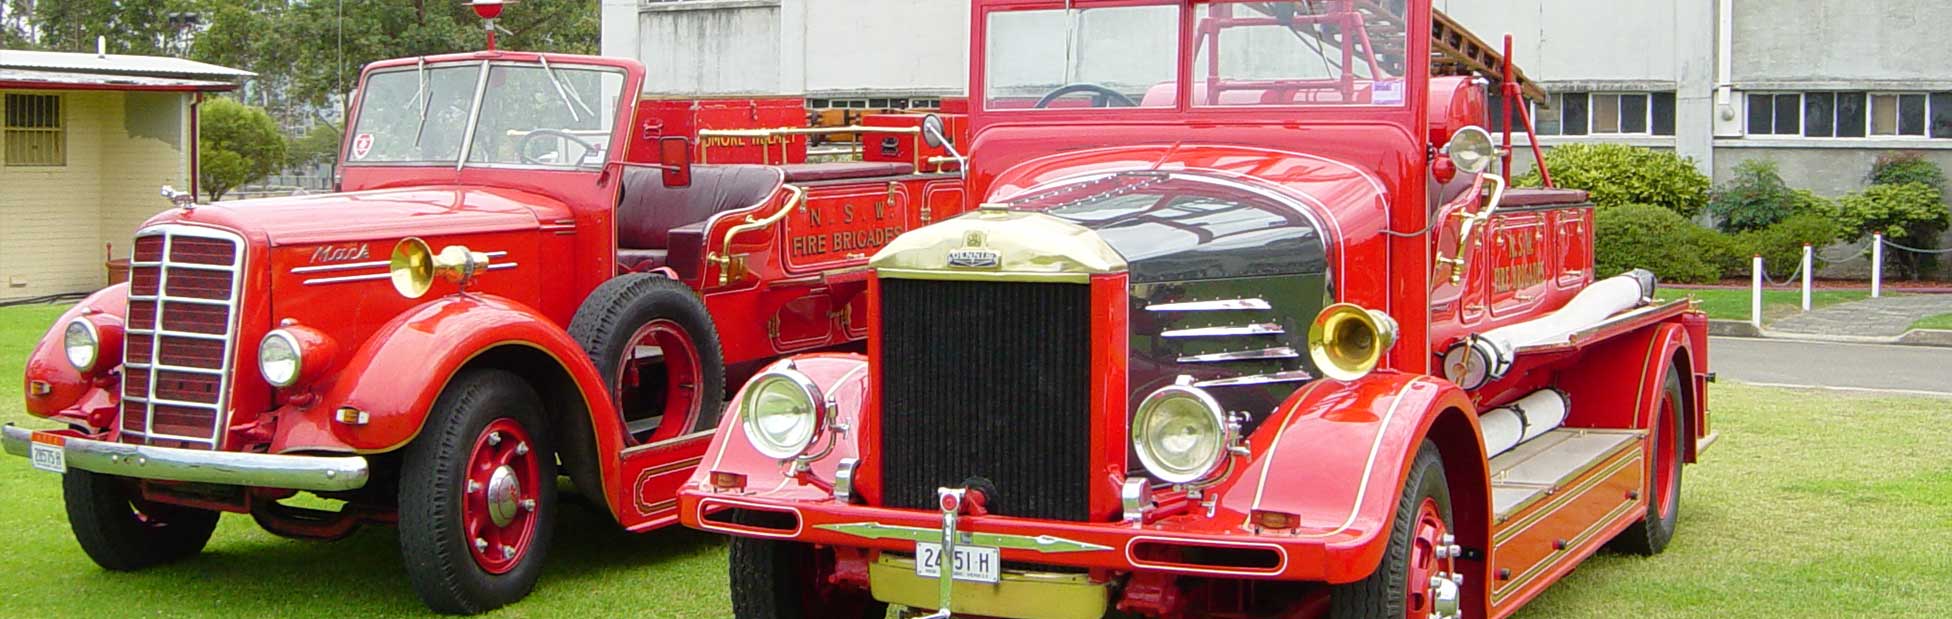 Historic fire truck